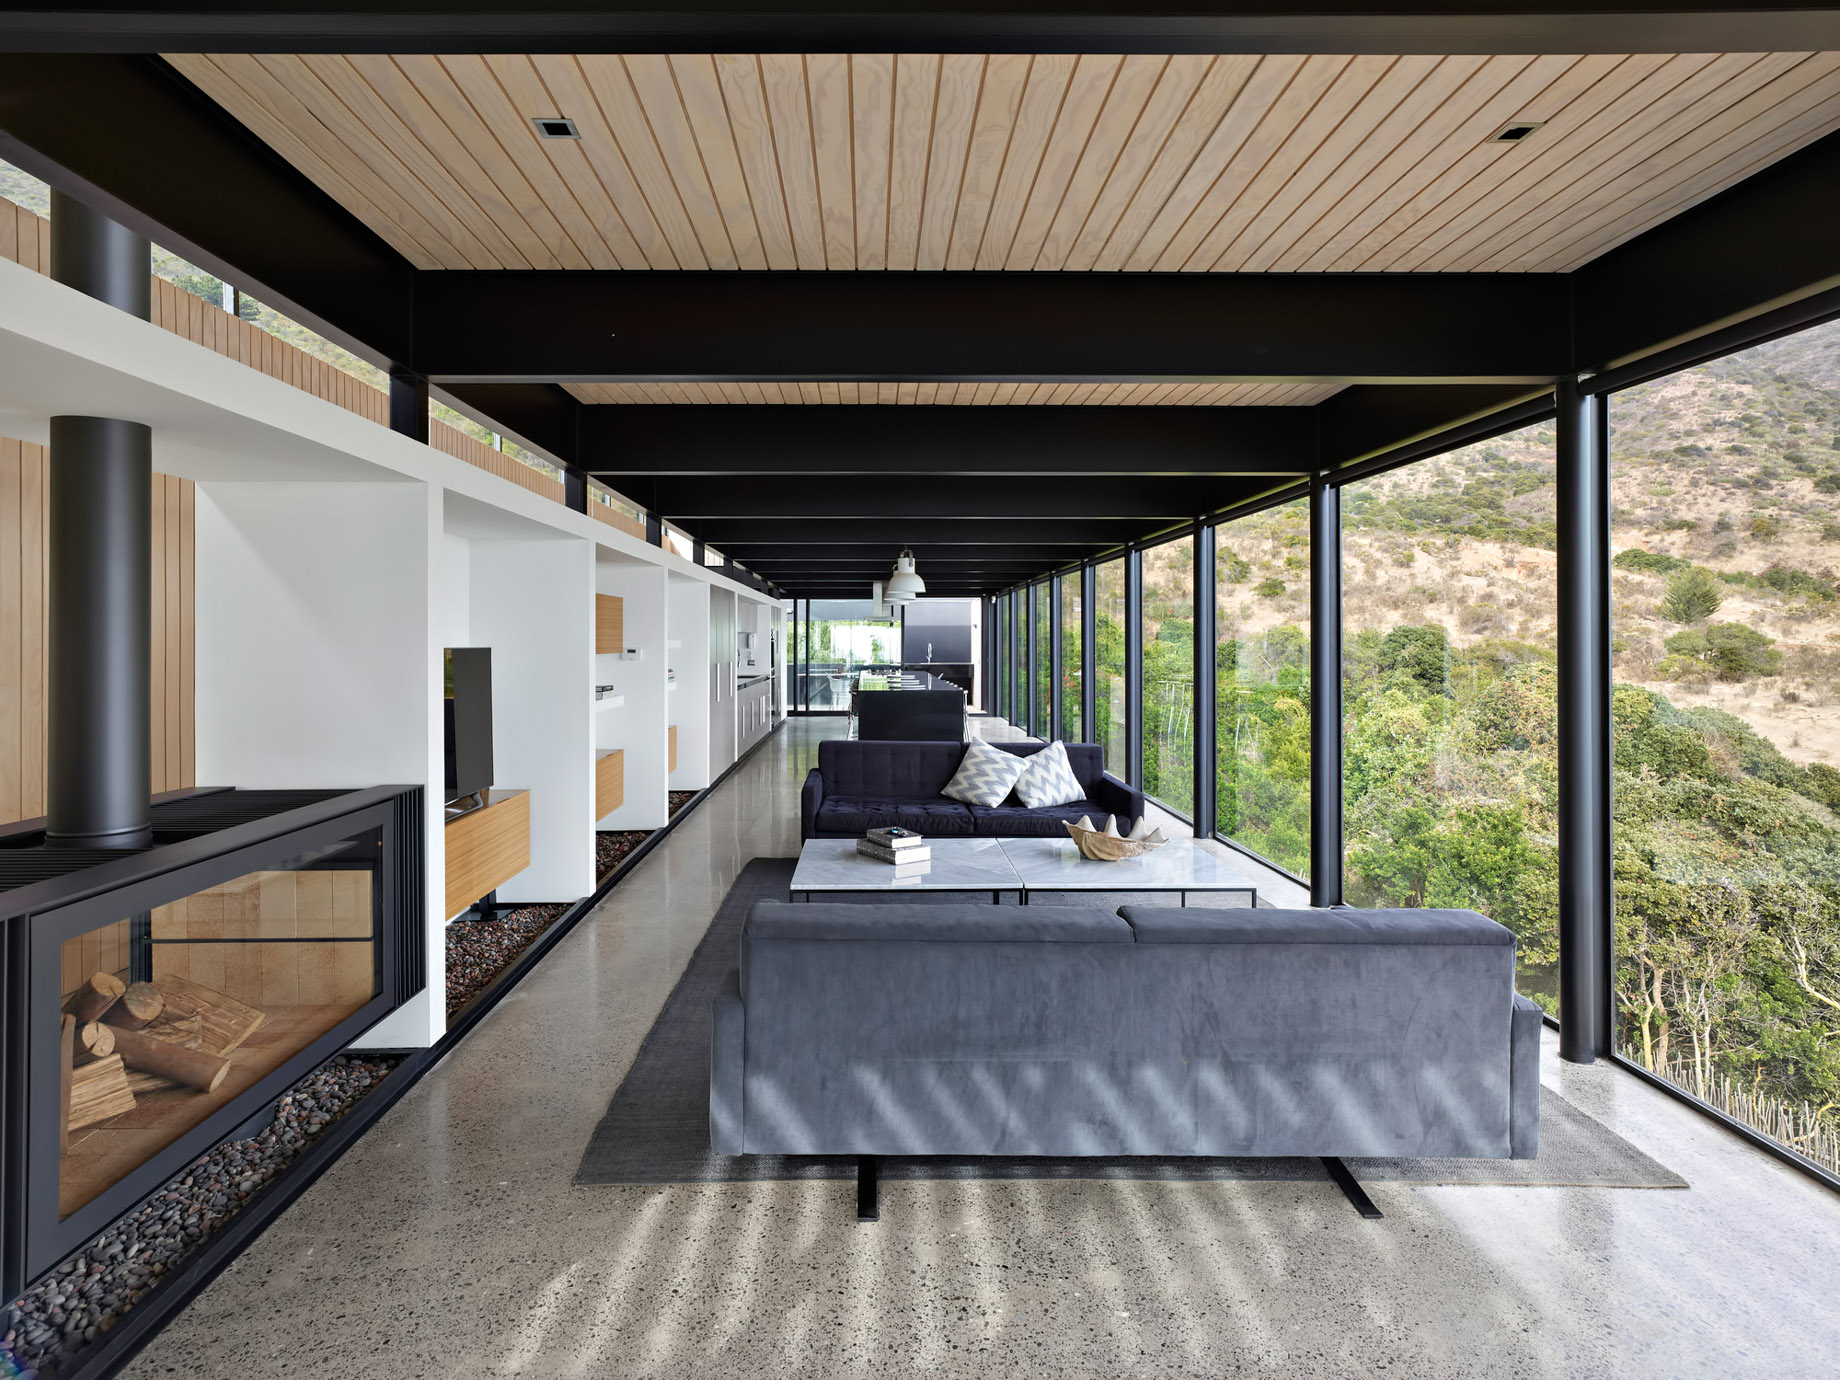 Casa Manns Luxury Residence – Zapallar, Chile